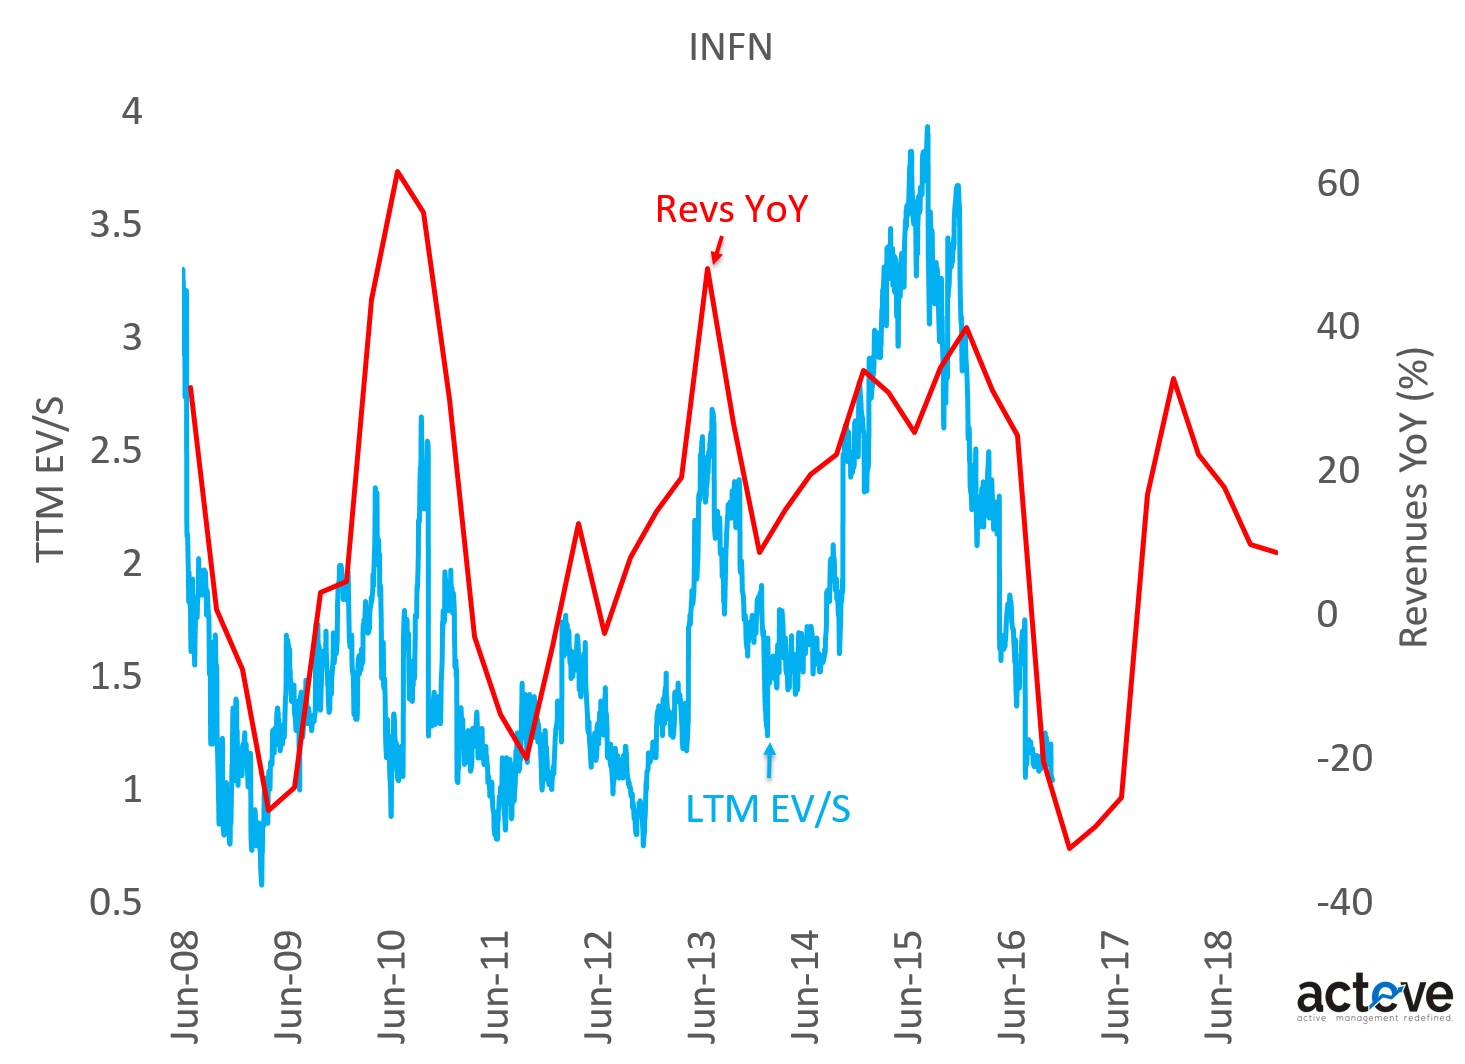 INFN EV/S vs. Revenues YoY